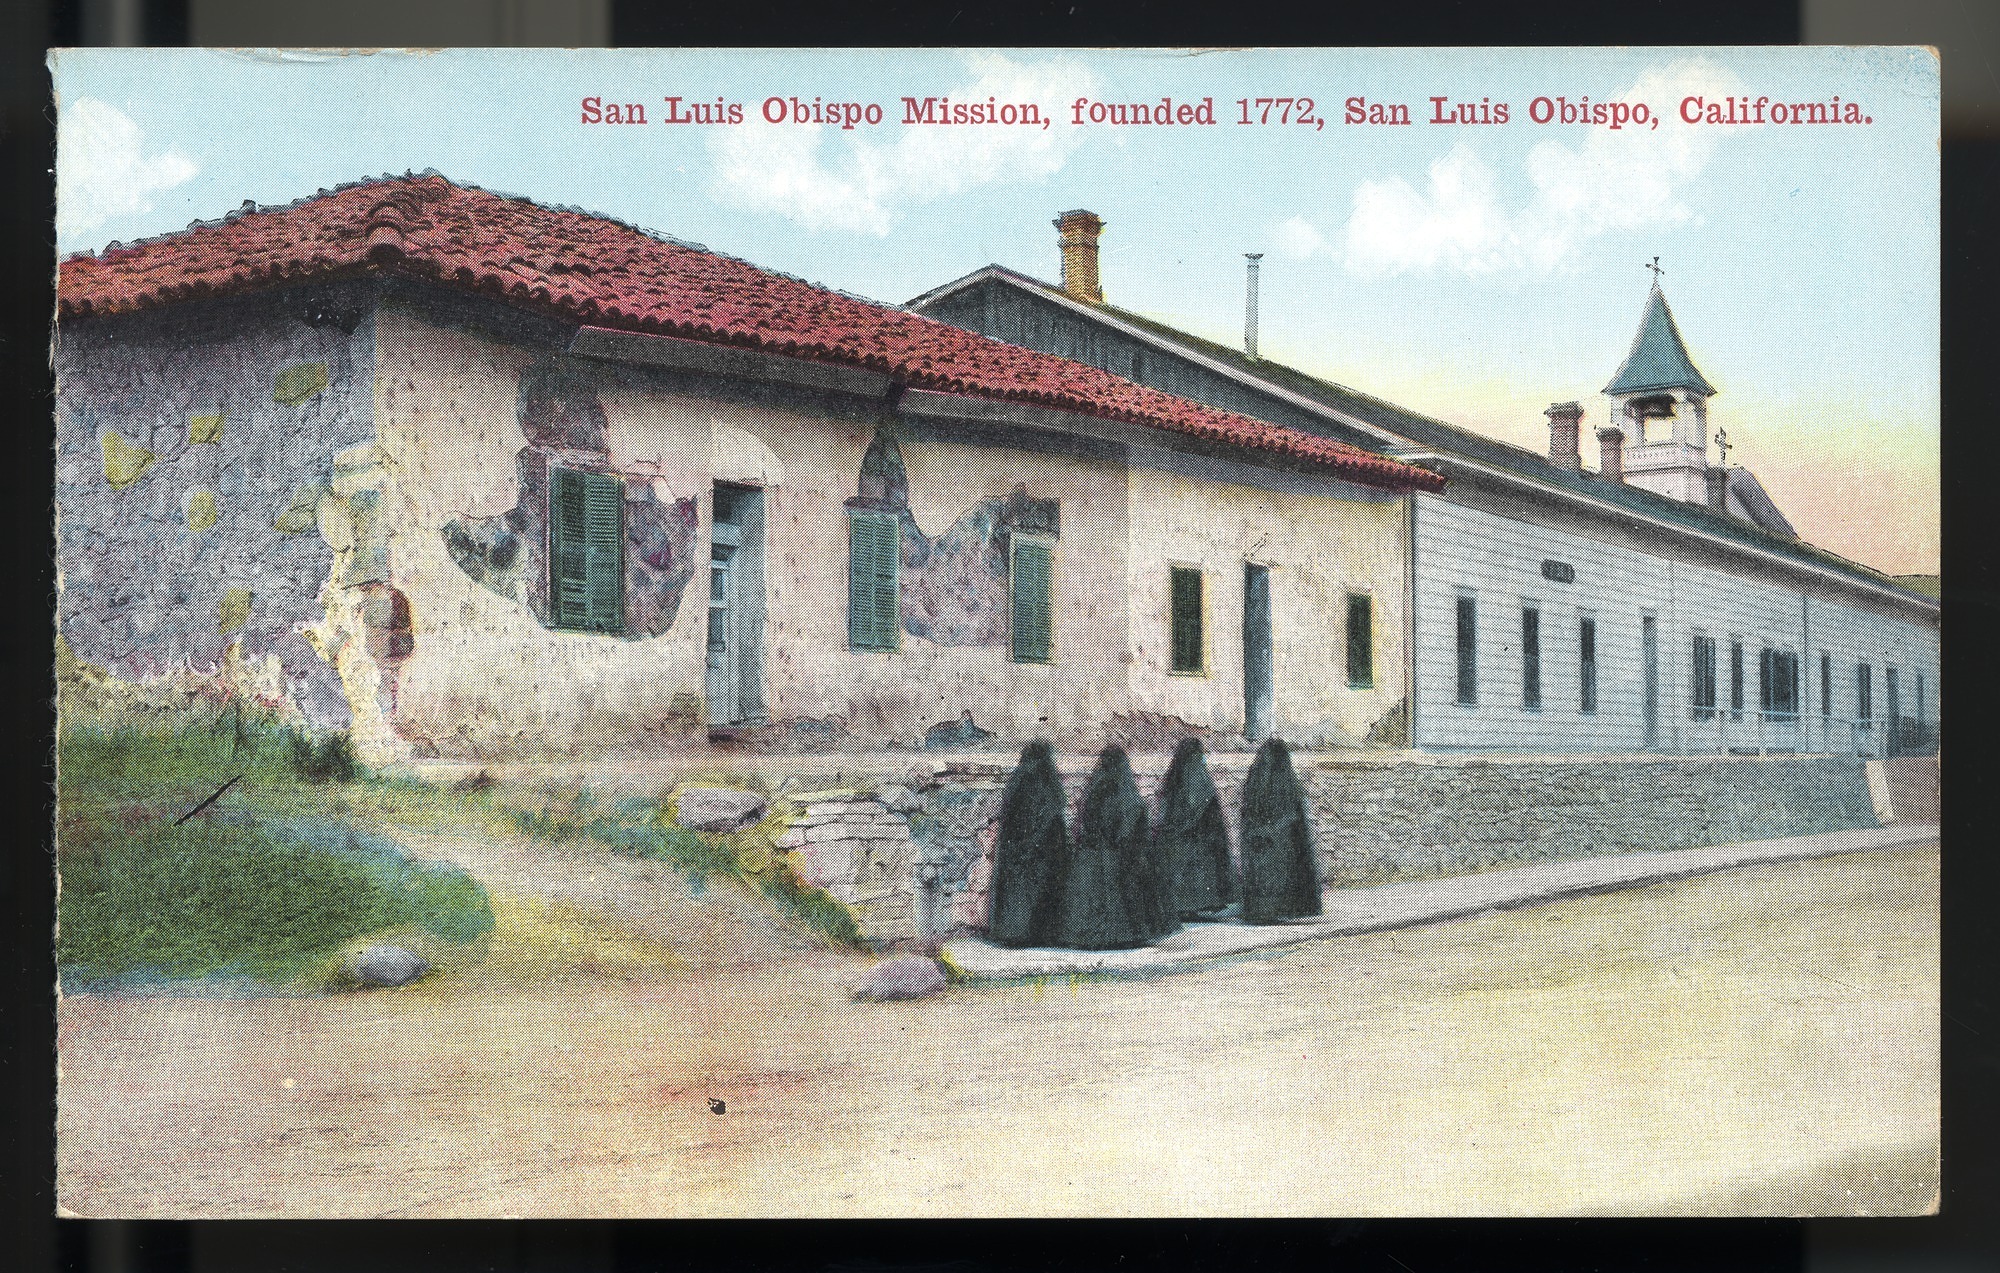 Postcard 21 – San Luis Obispo Mission, founded 1772, San Luis Obispo, California. Van Ornum Colorprint Company. 1908-1921. NMAH 1986.0639.0481.